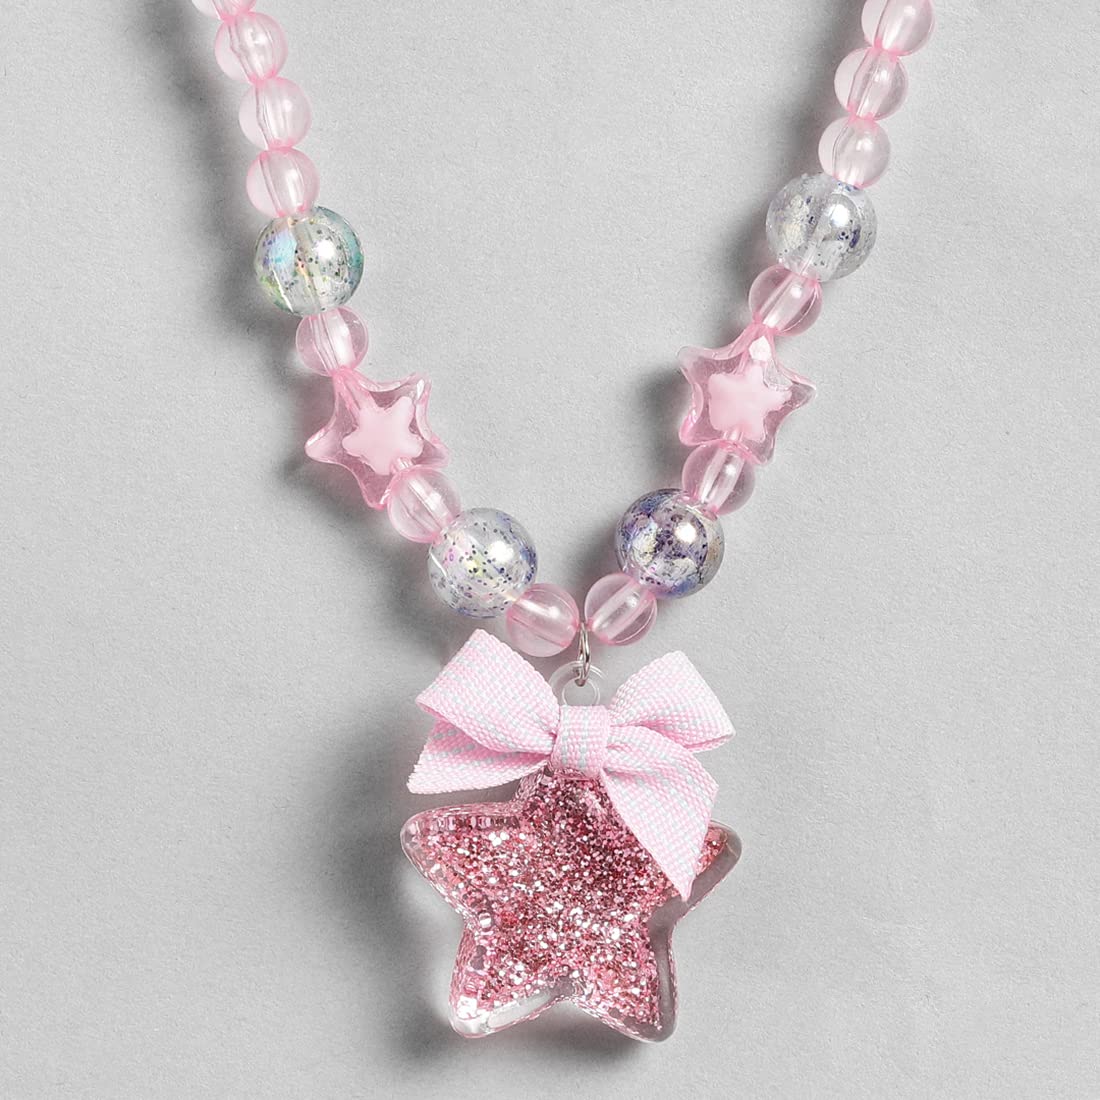 El Regalo 1 Pair Girls Kids Glittery Star Beads Princess Necklace & Bracelet Sets- Acrylic Star Beads Princess Necklace Bracelet Jewelry Set - Gift for Little Girls